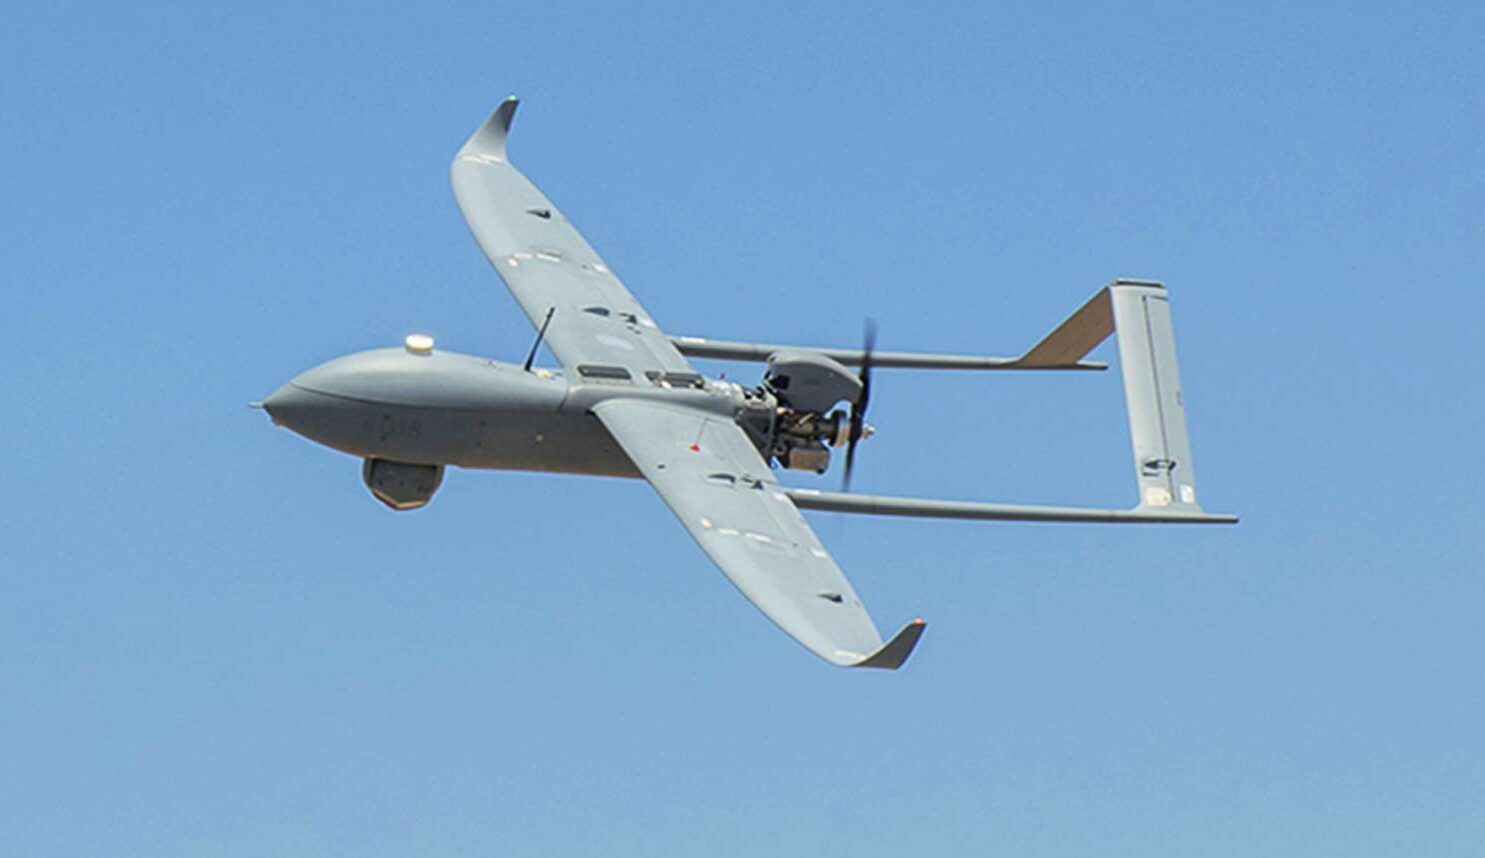 Textron Systems' Aerosonde drone